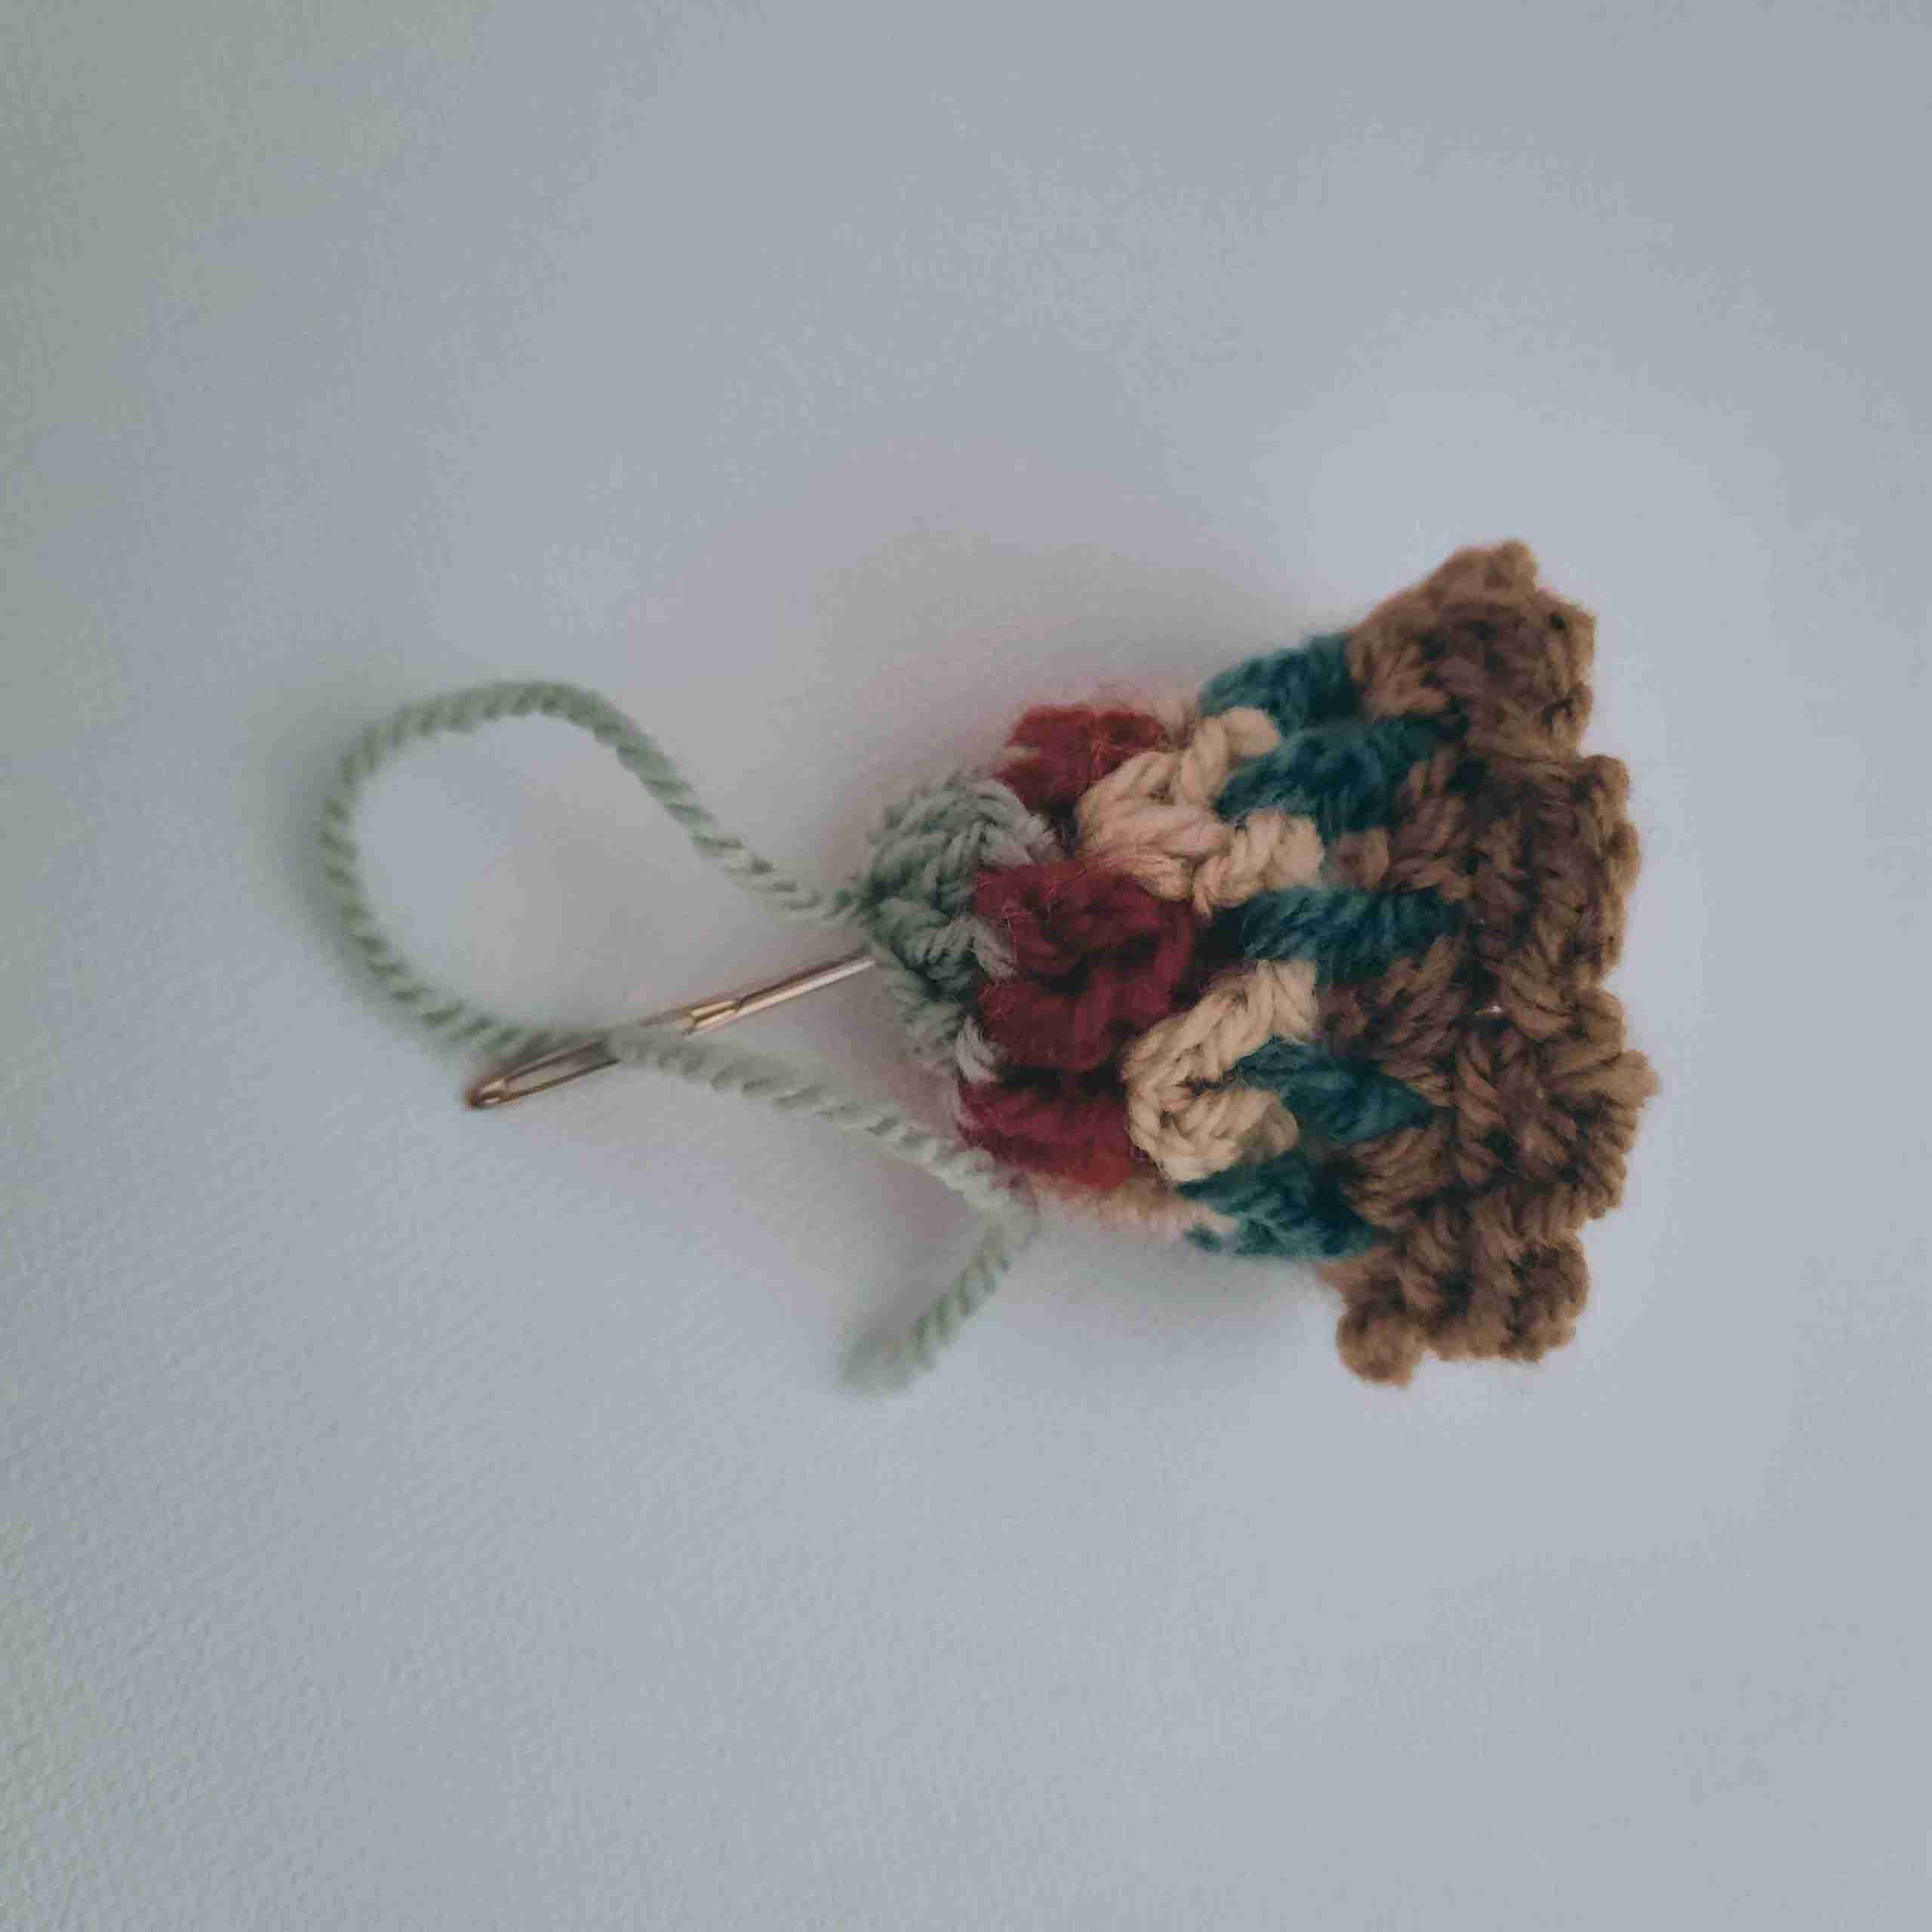 Crochet bell ornament pattern